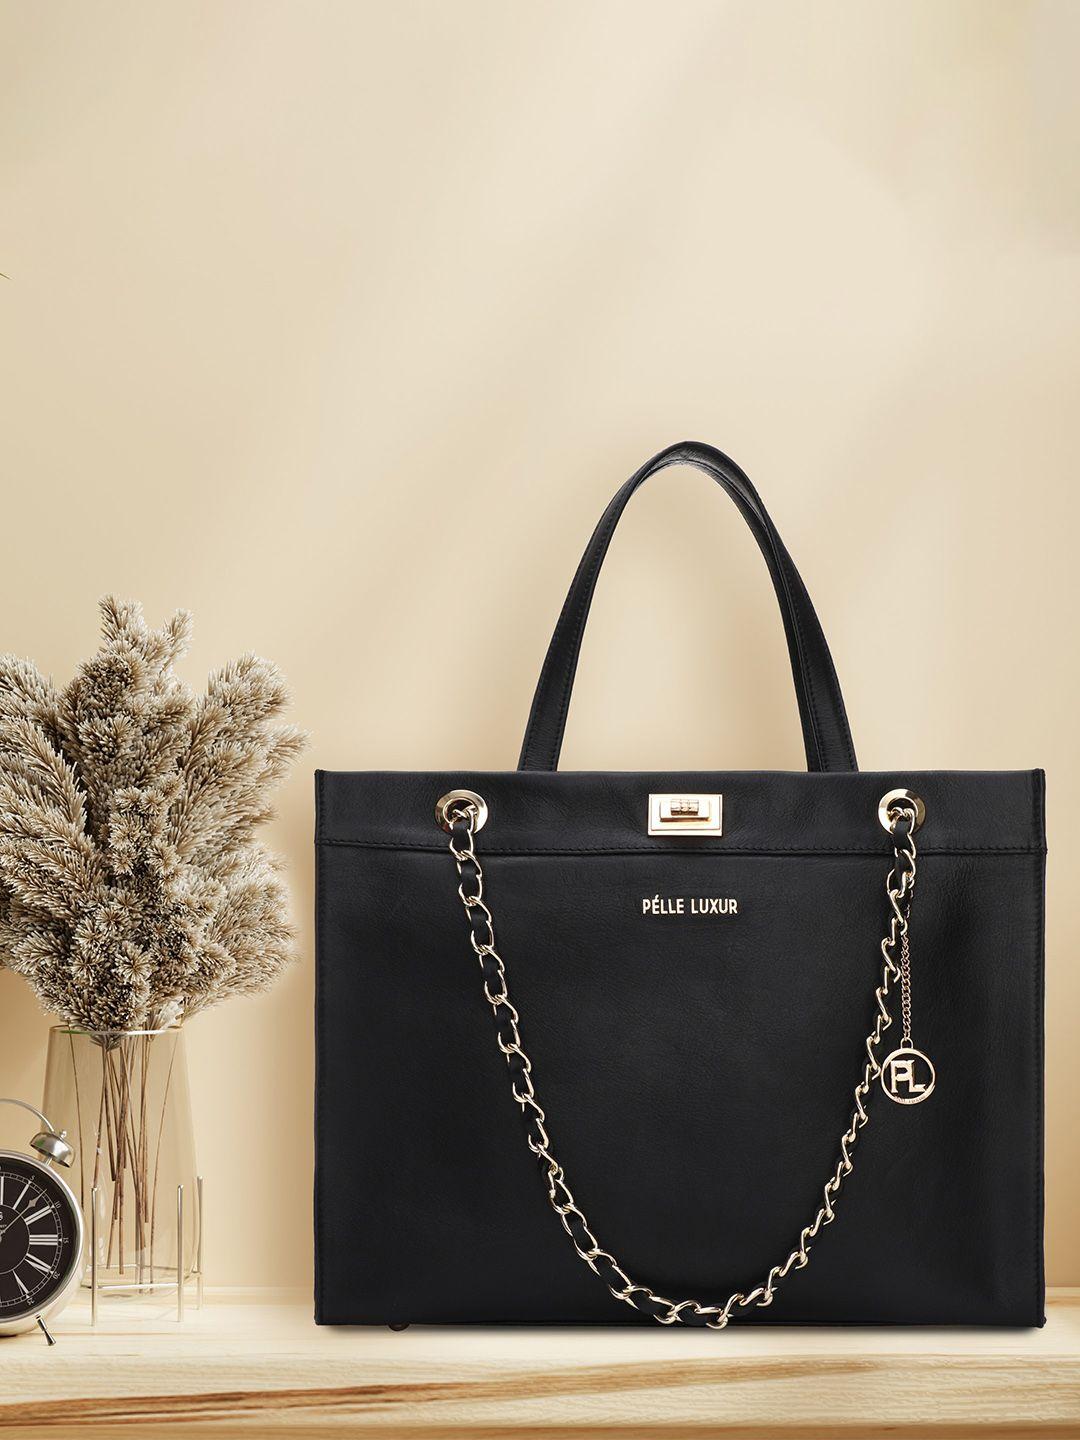 pelle luxur black leather oversized structured handheld bag